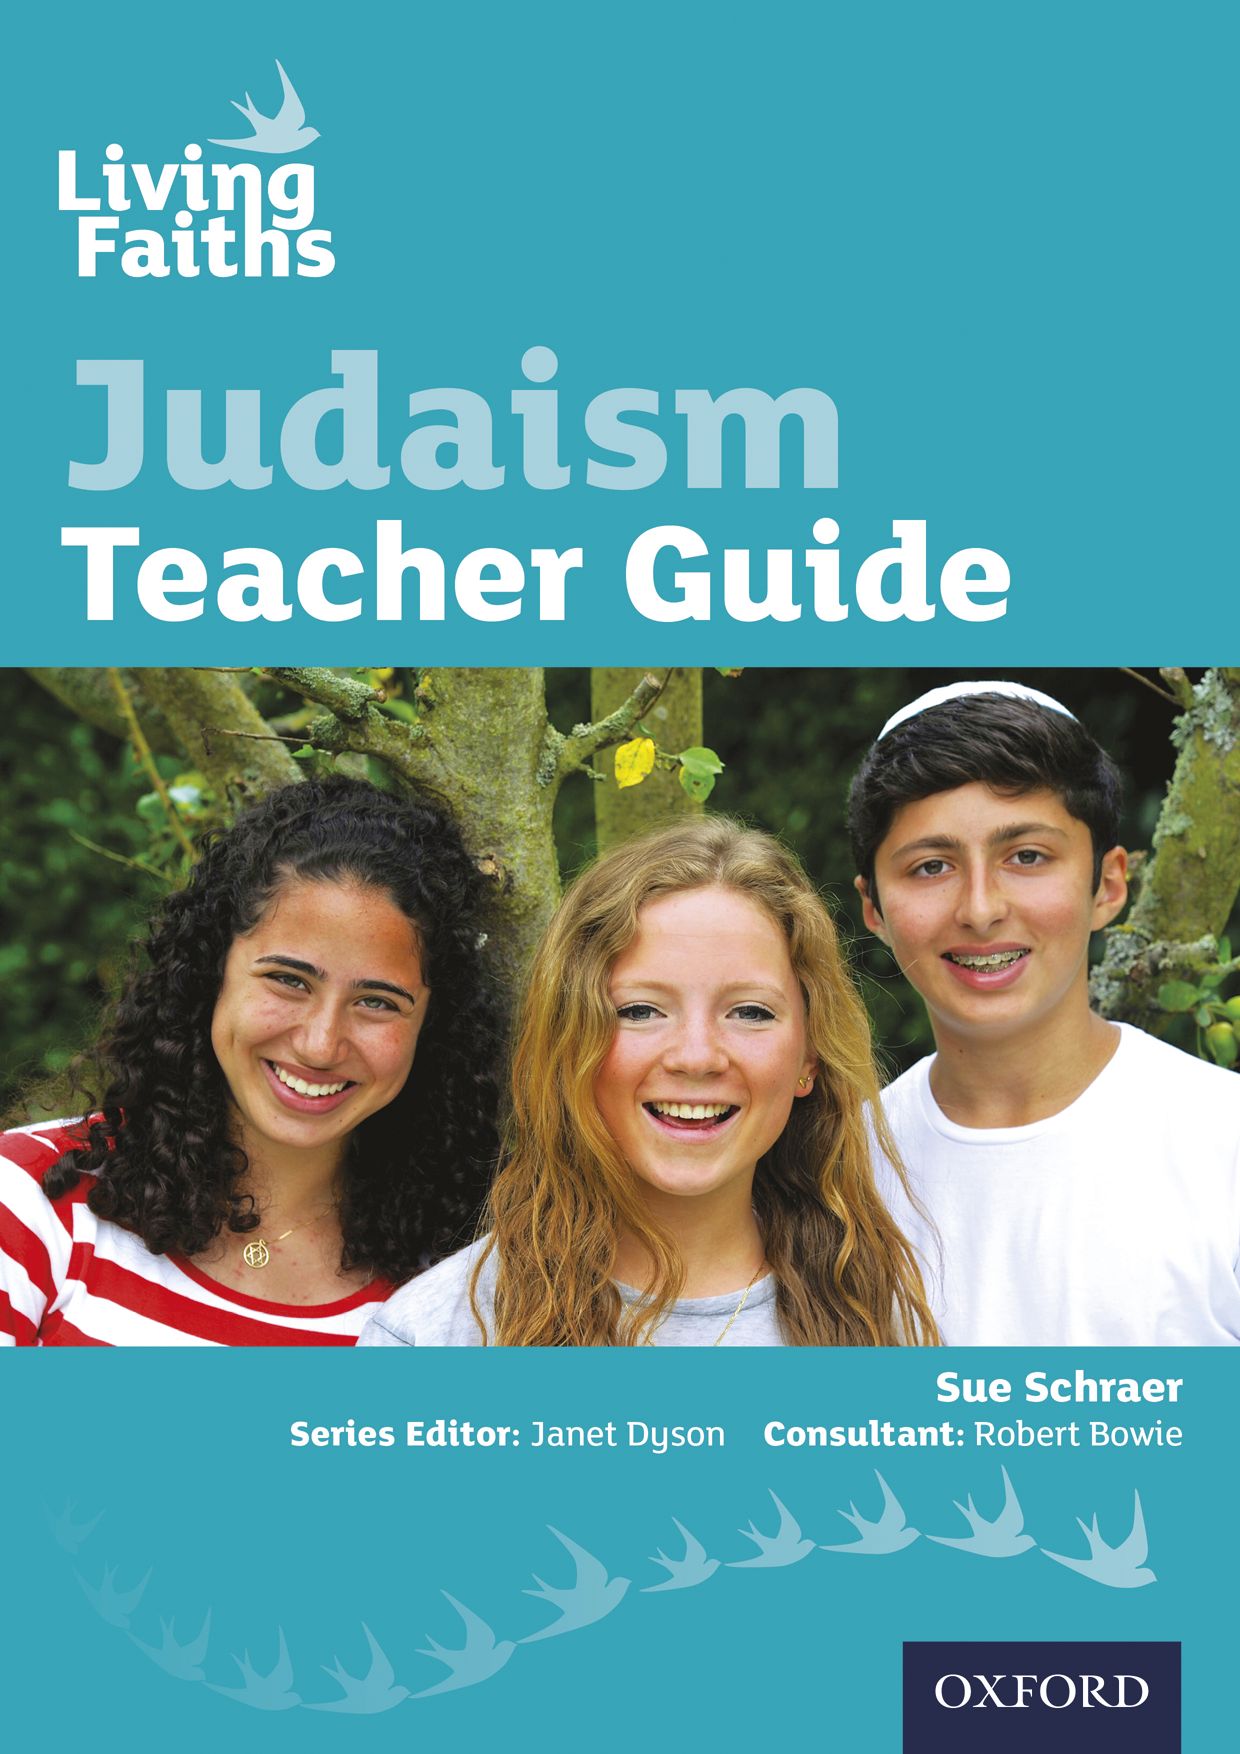 Featured image for “Living Faiths Judaism Teacher Guide”